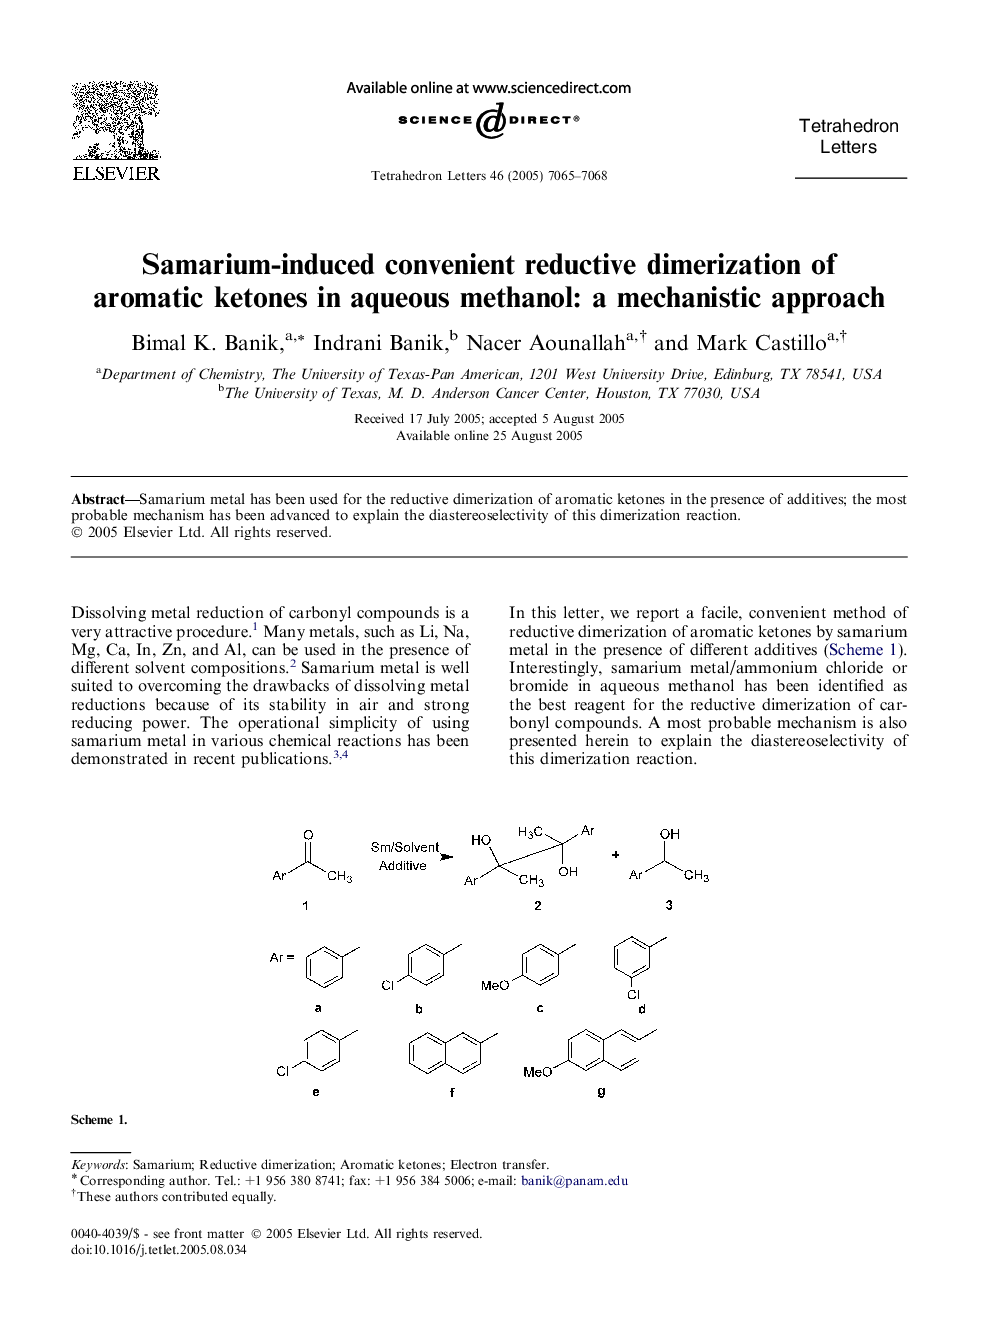 Samarium-induced convenient reductive dimerization of aromatic ketones in aqueous methanol: a mechanistic approach